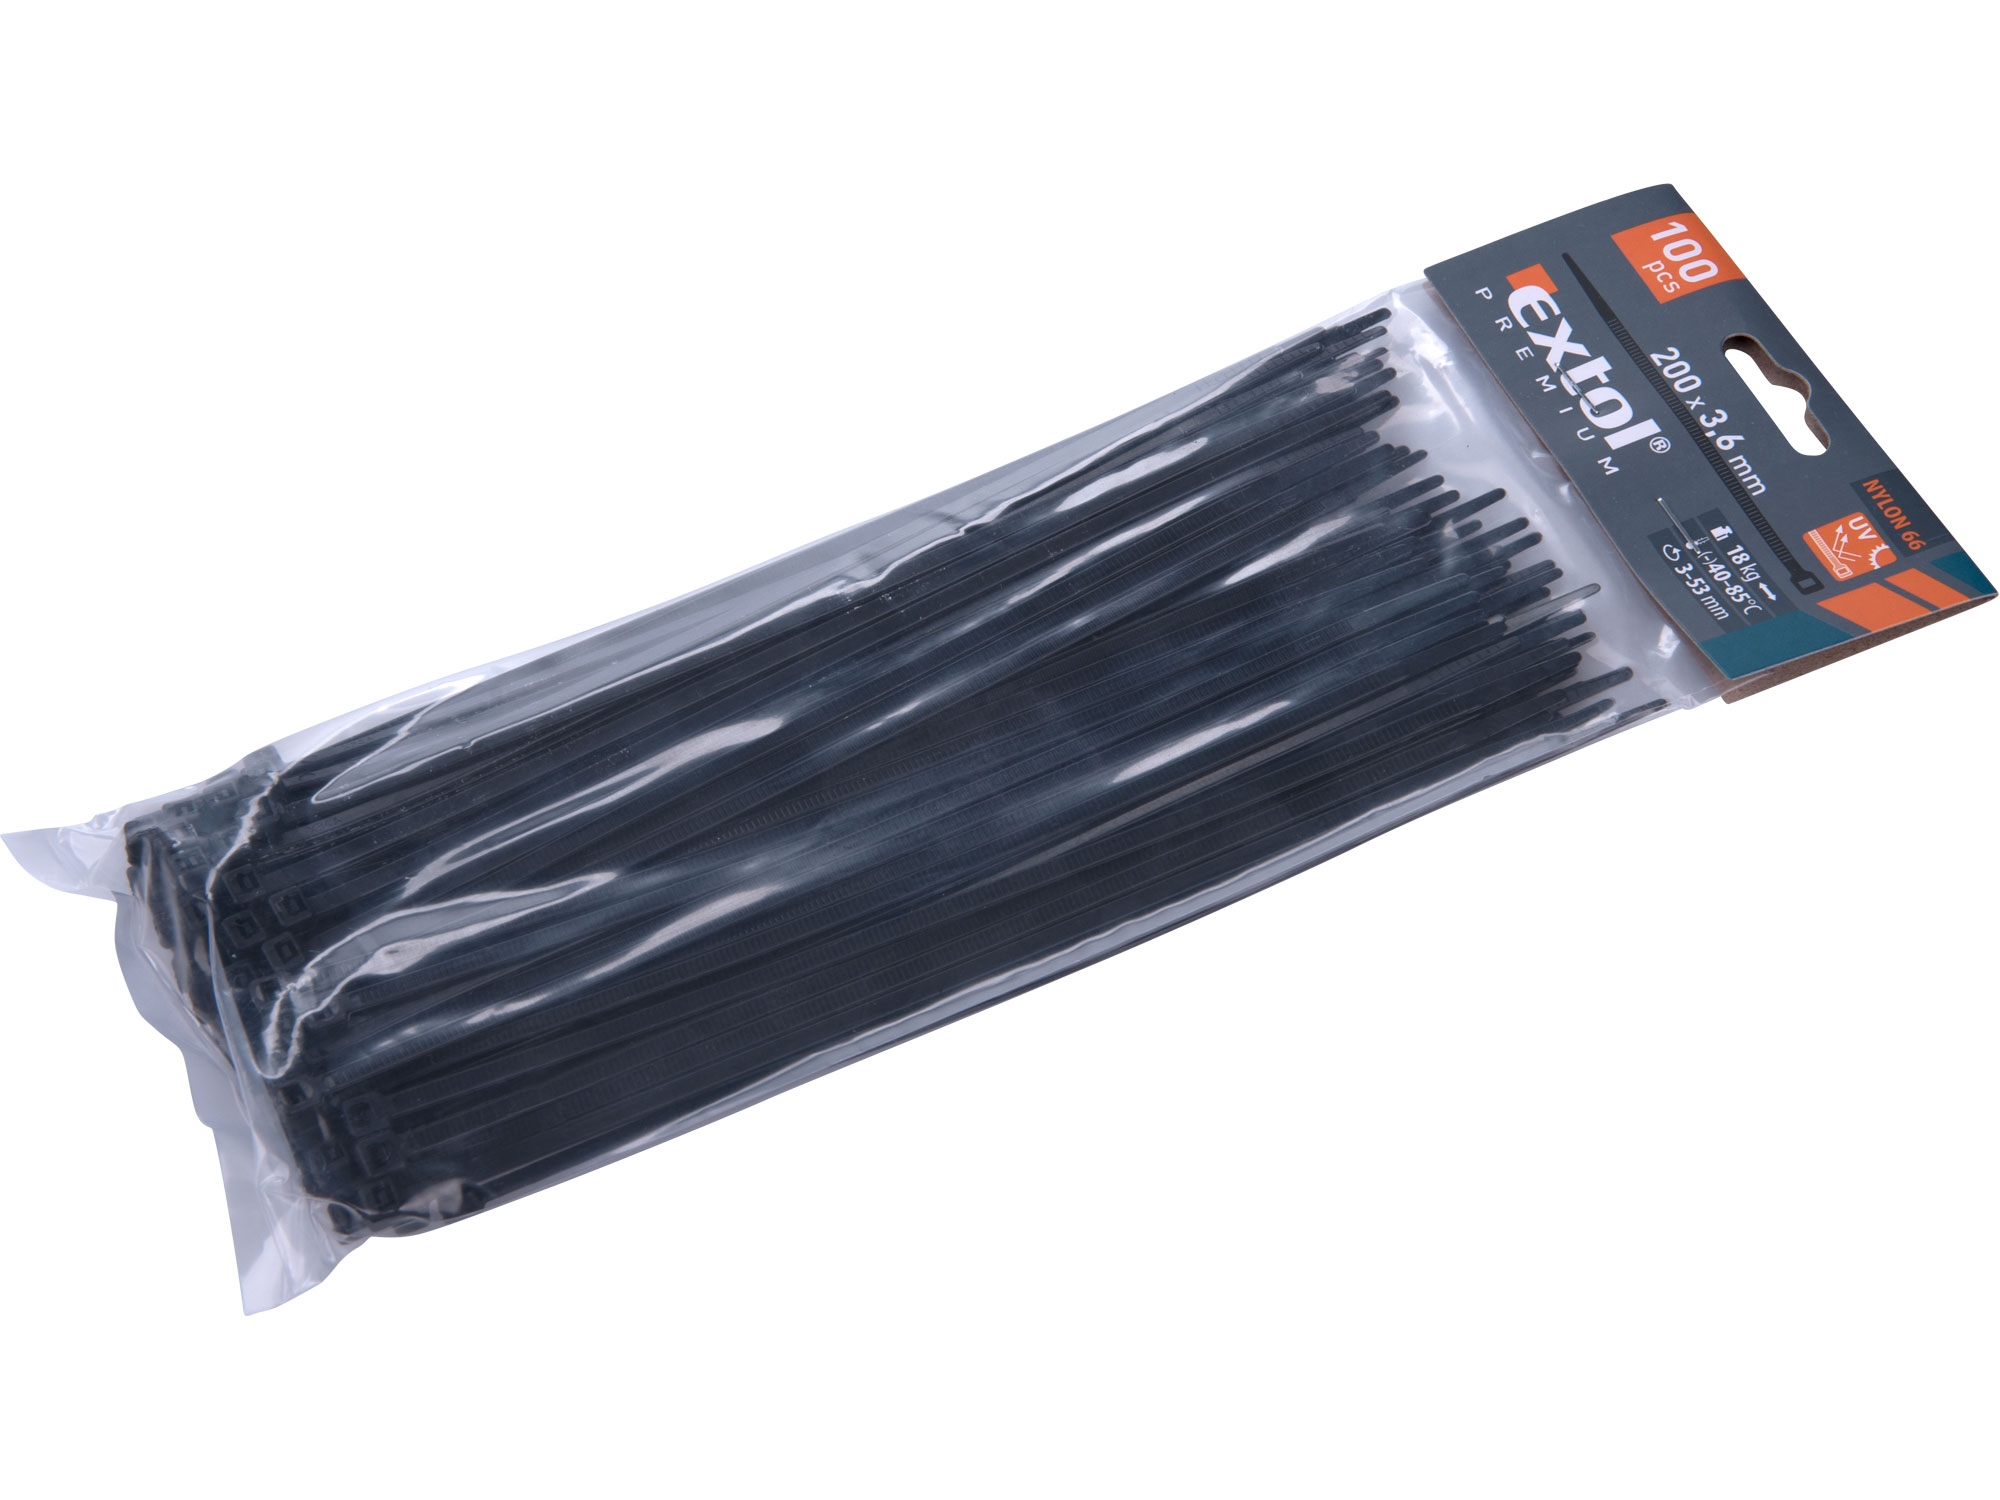 pásky stahovací černé, 200x3,6mm, 100ks, nylon, EXTOL PREMIUM 8856156